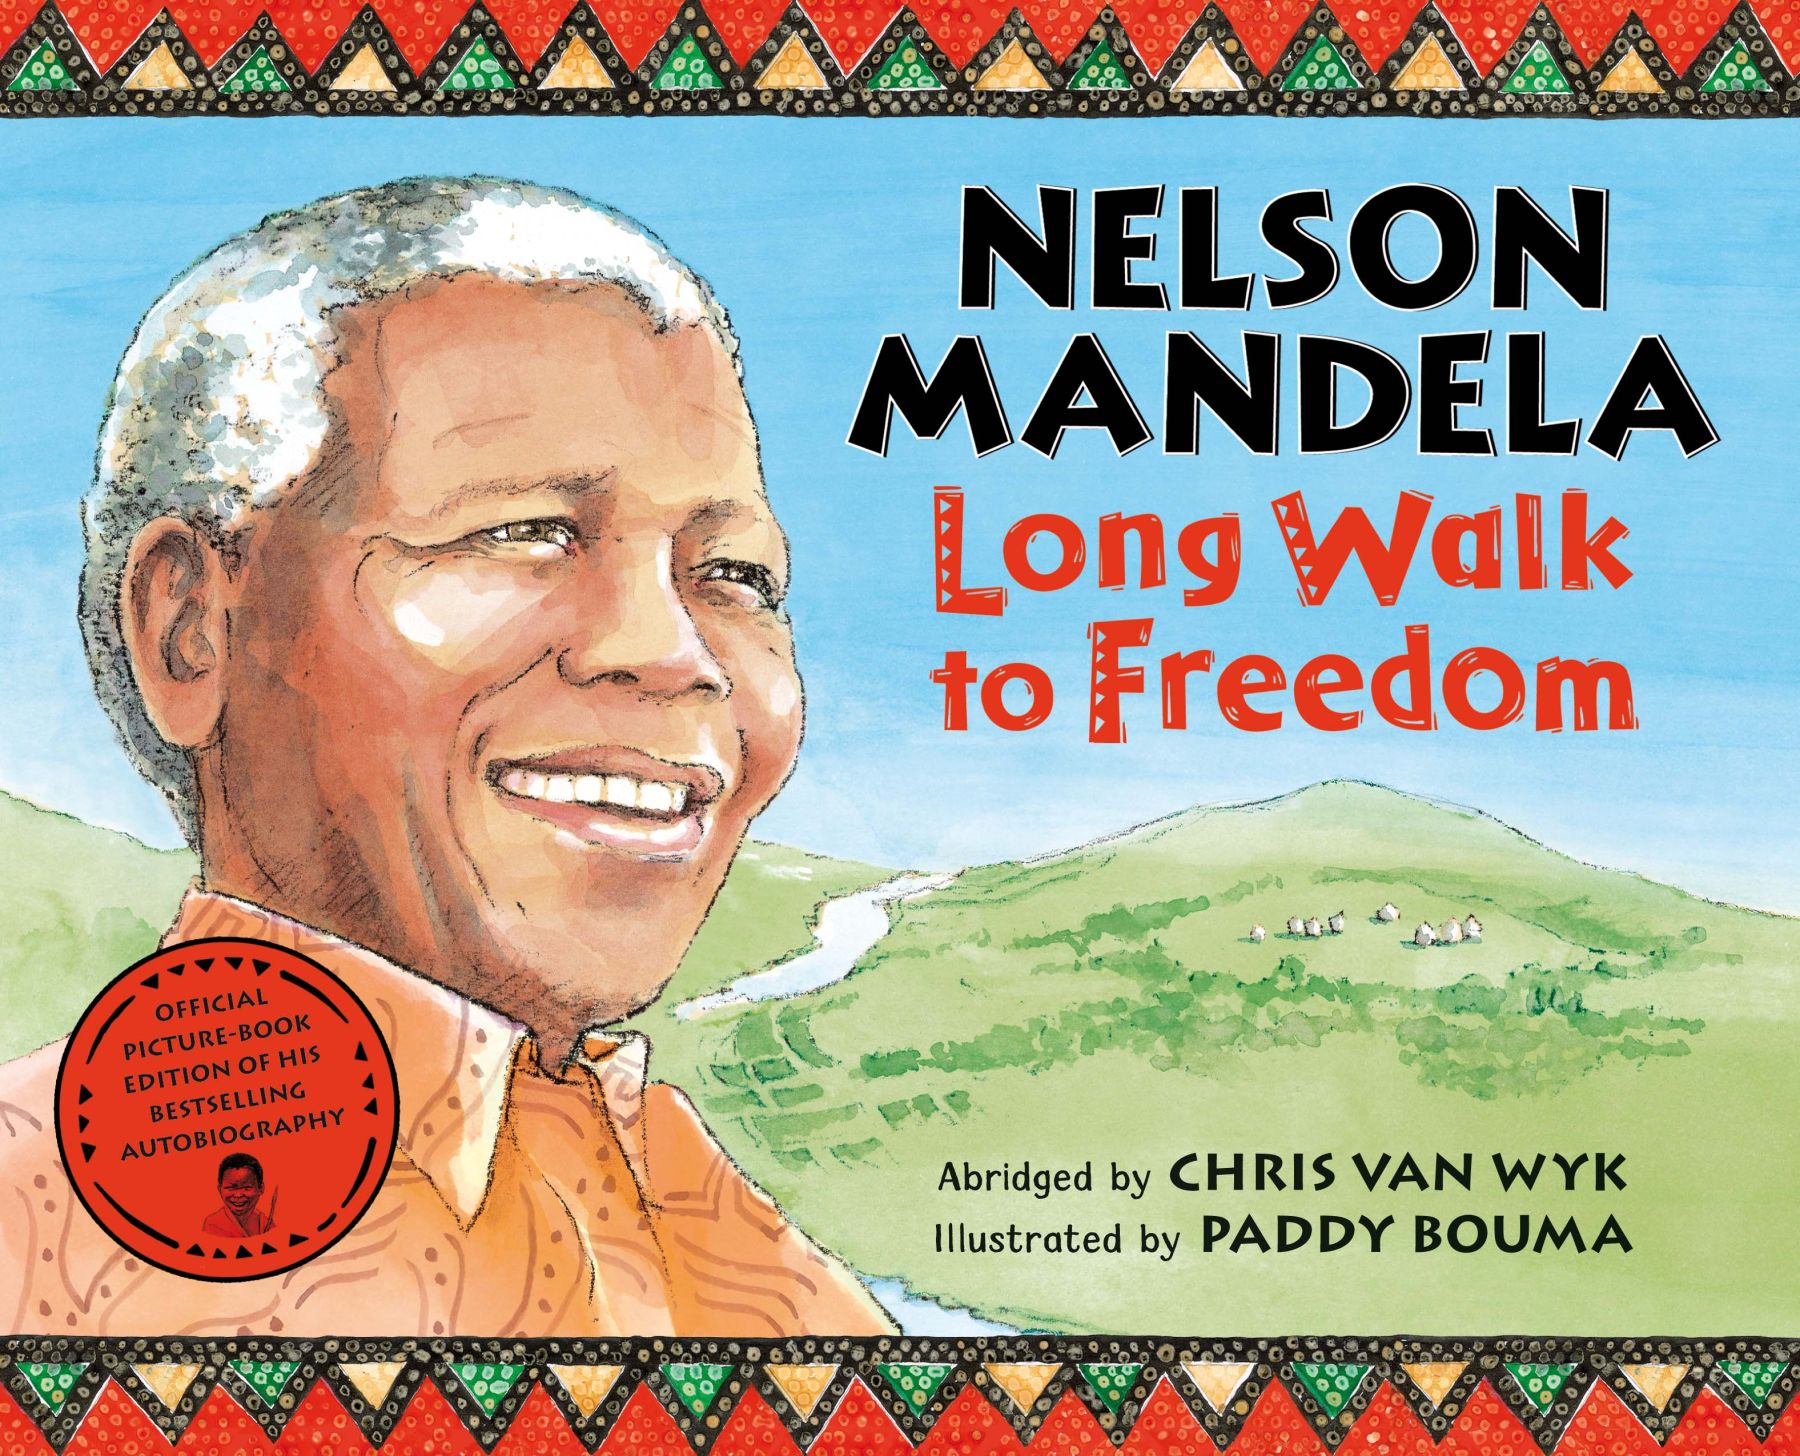 essay on nelson mandela long walk to freedom